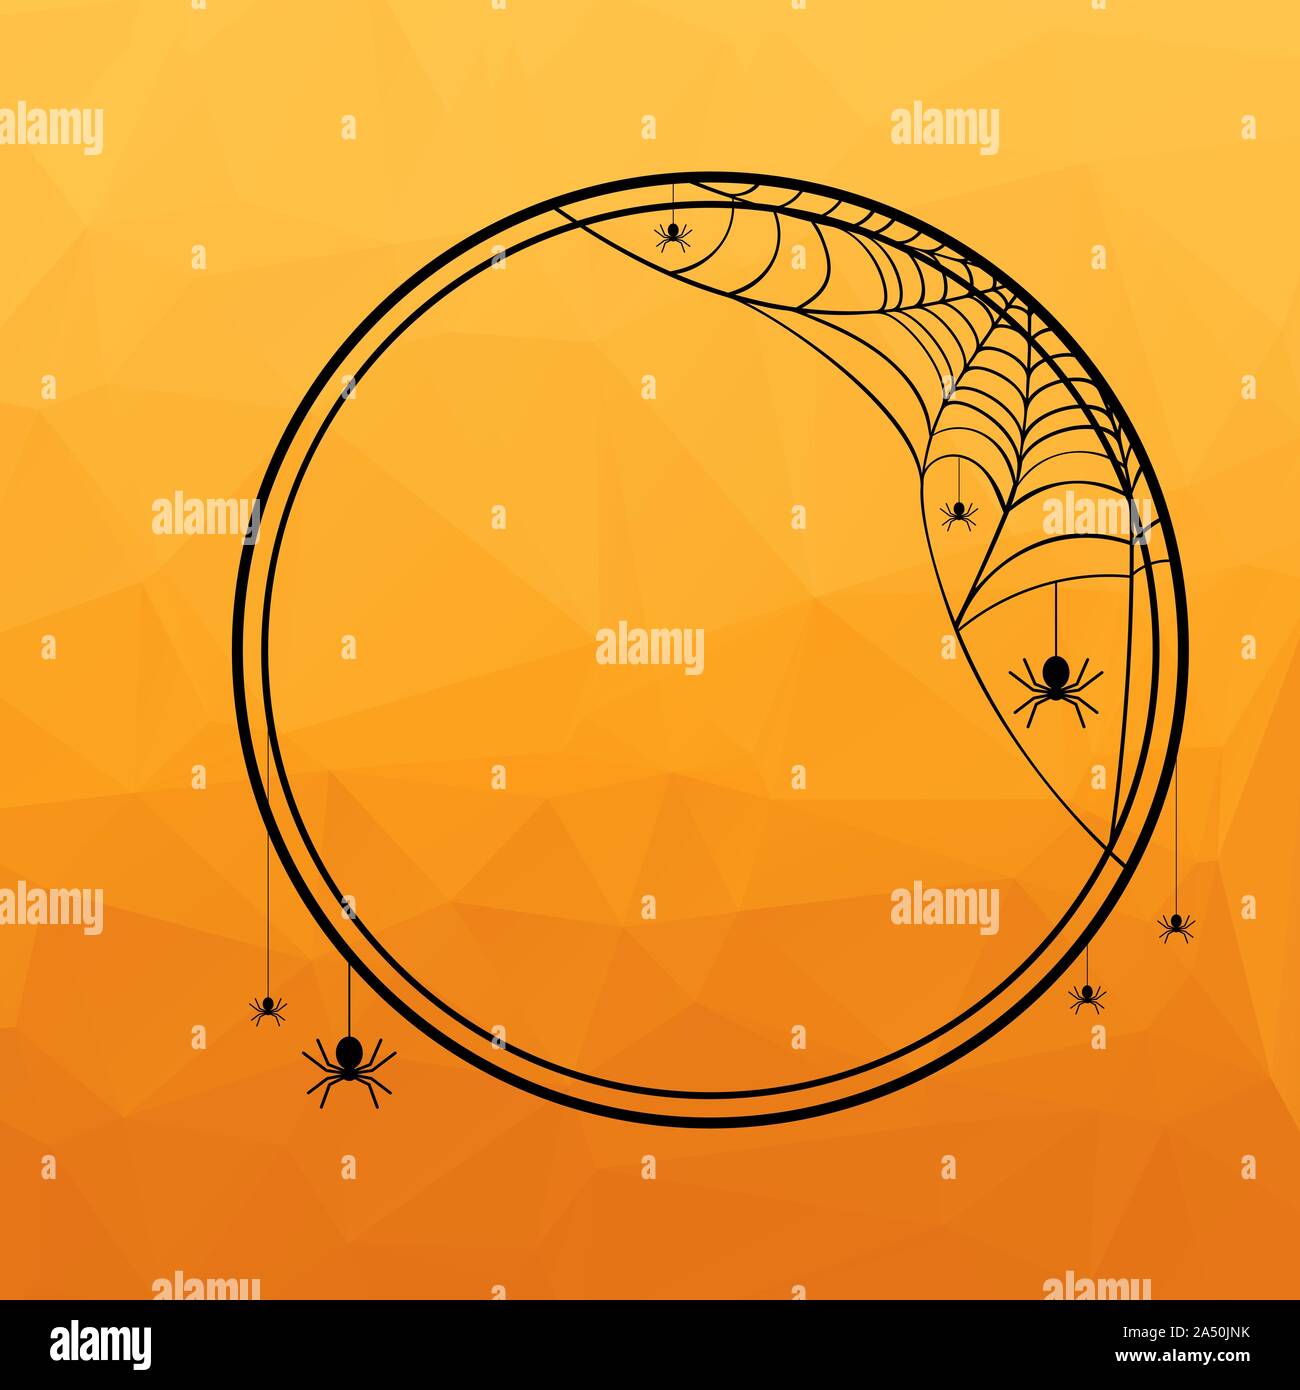 Halloween cornice rotonda con spider web silhouette arancione su sfondo poligonale. Illustrazione Vettoriale Illustrazione Vettoriale